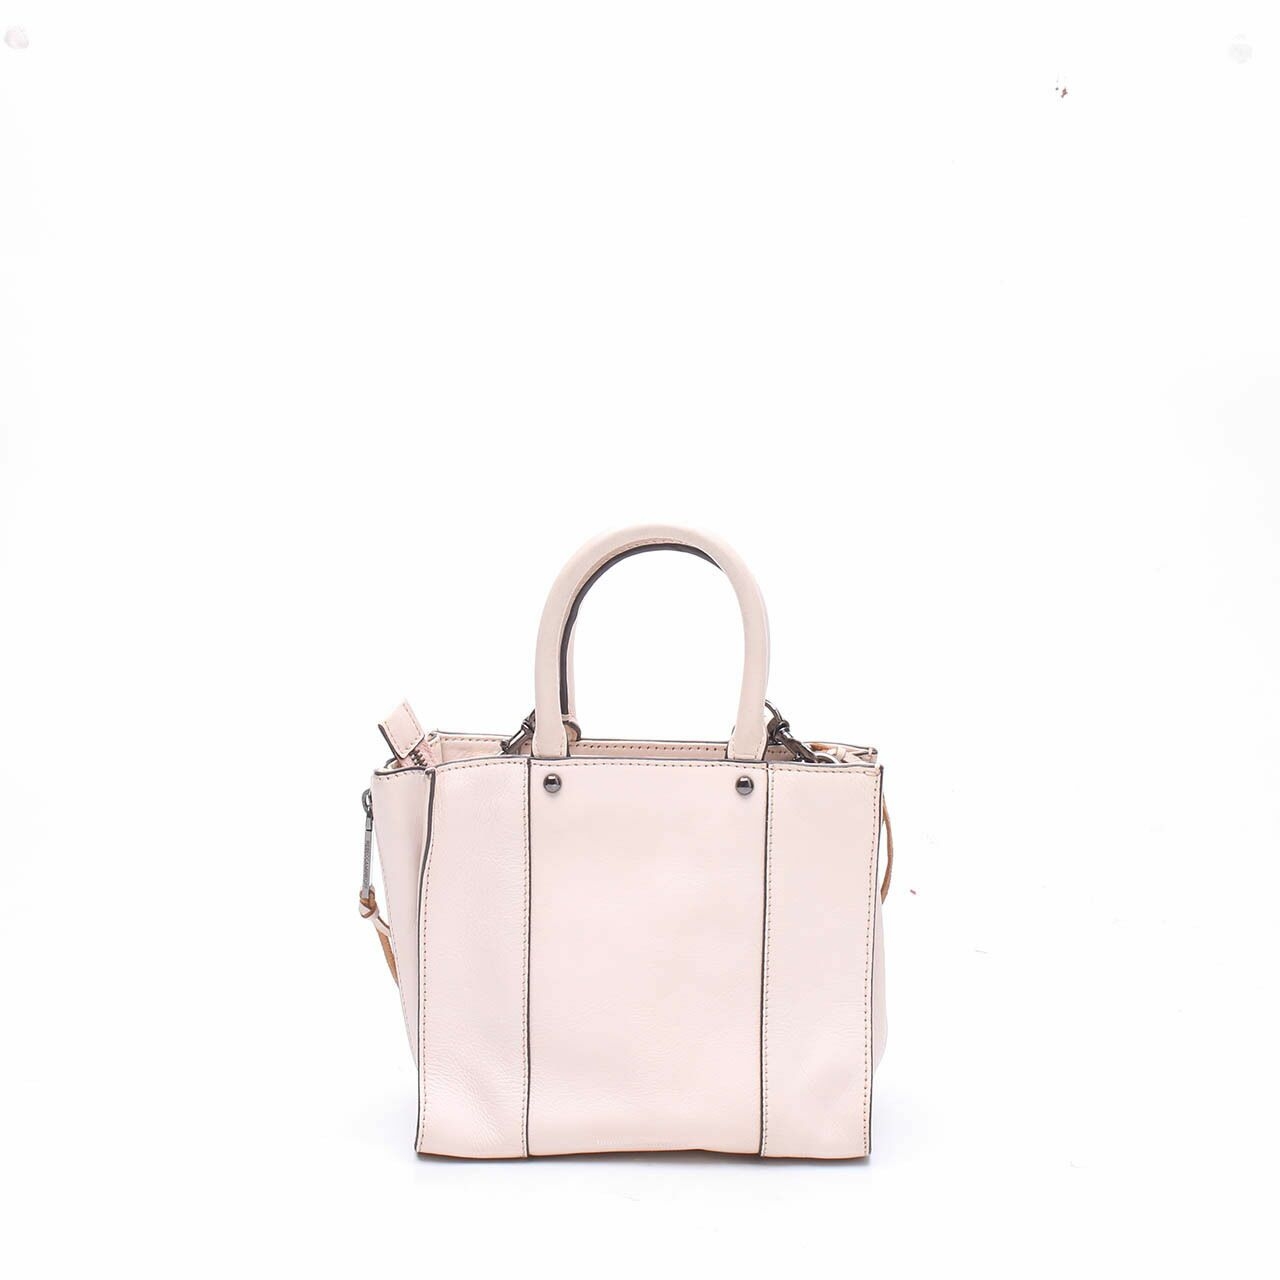 Rebecca Minkoff Pink Satchel Bag